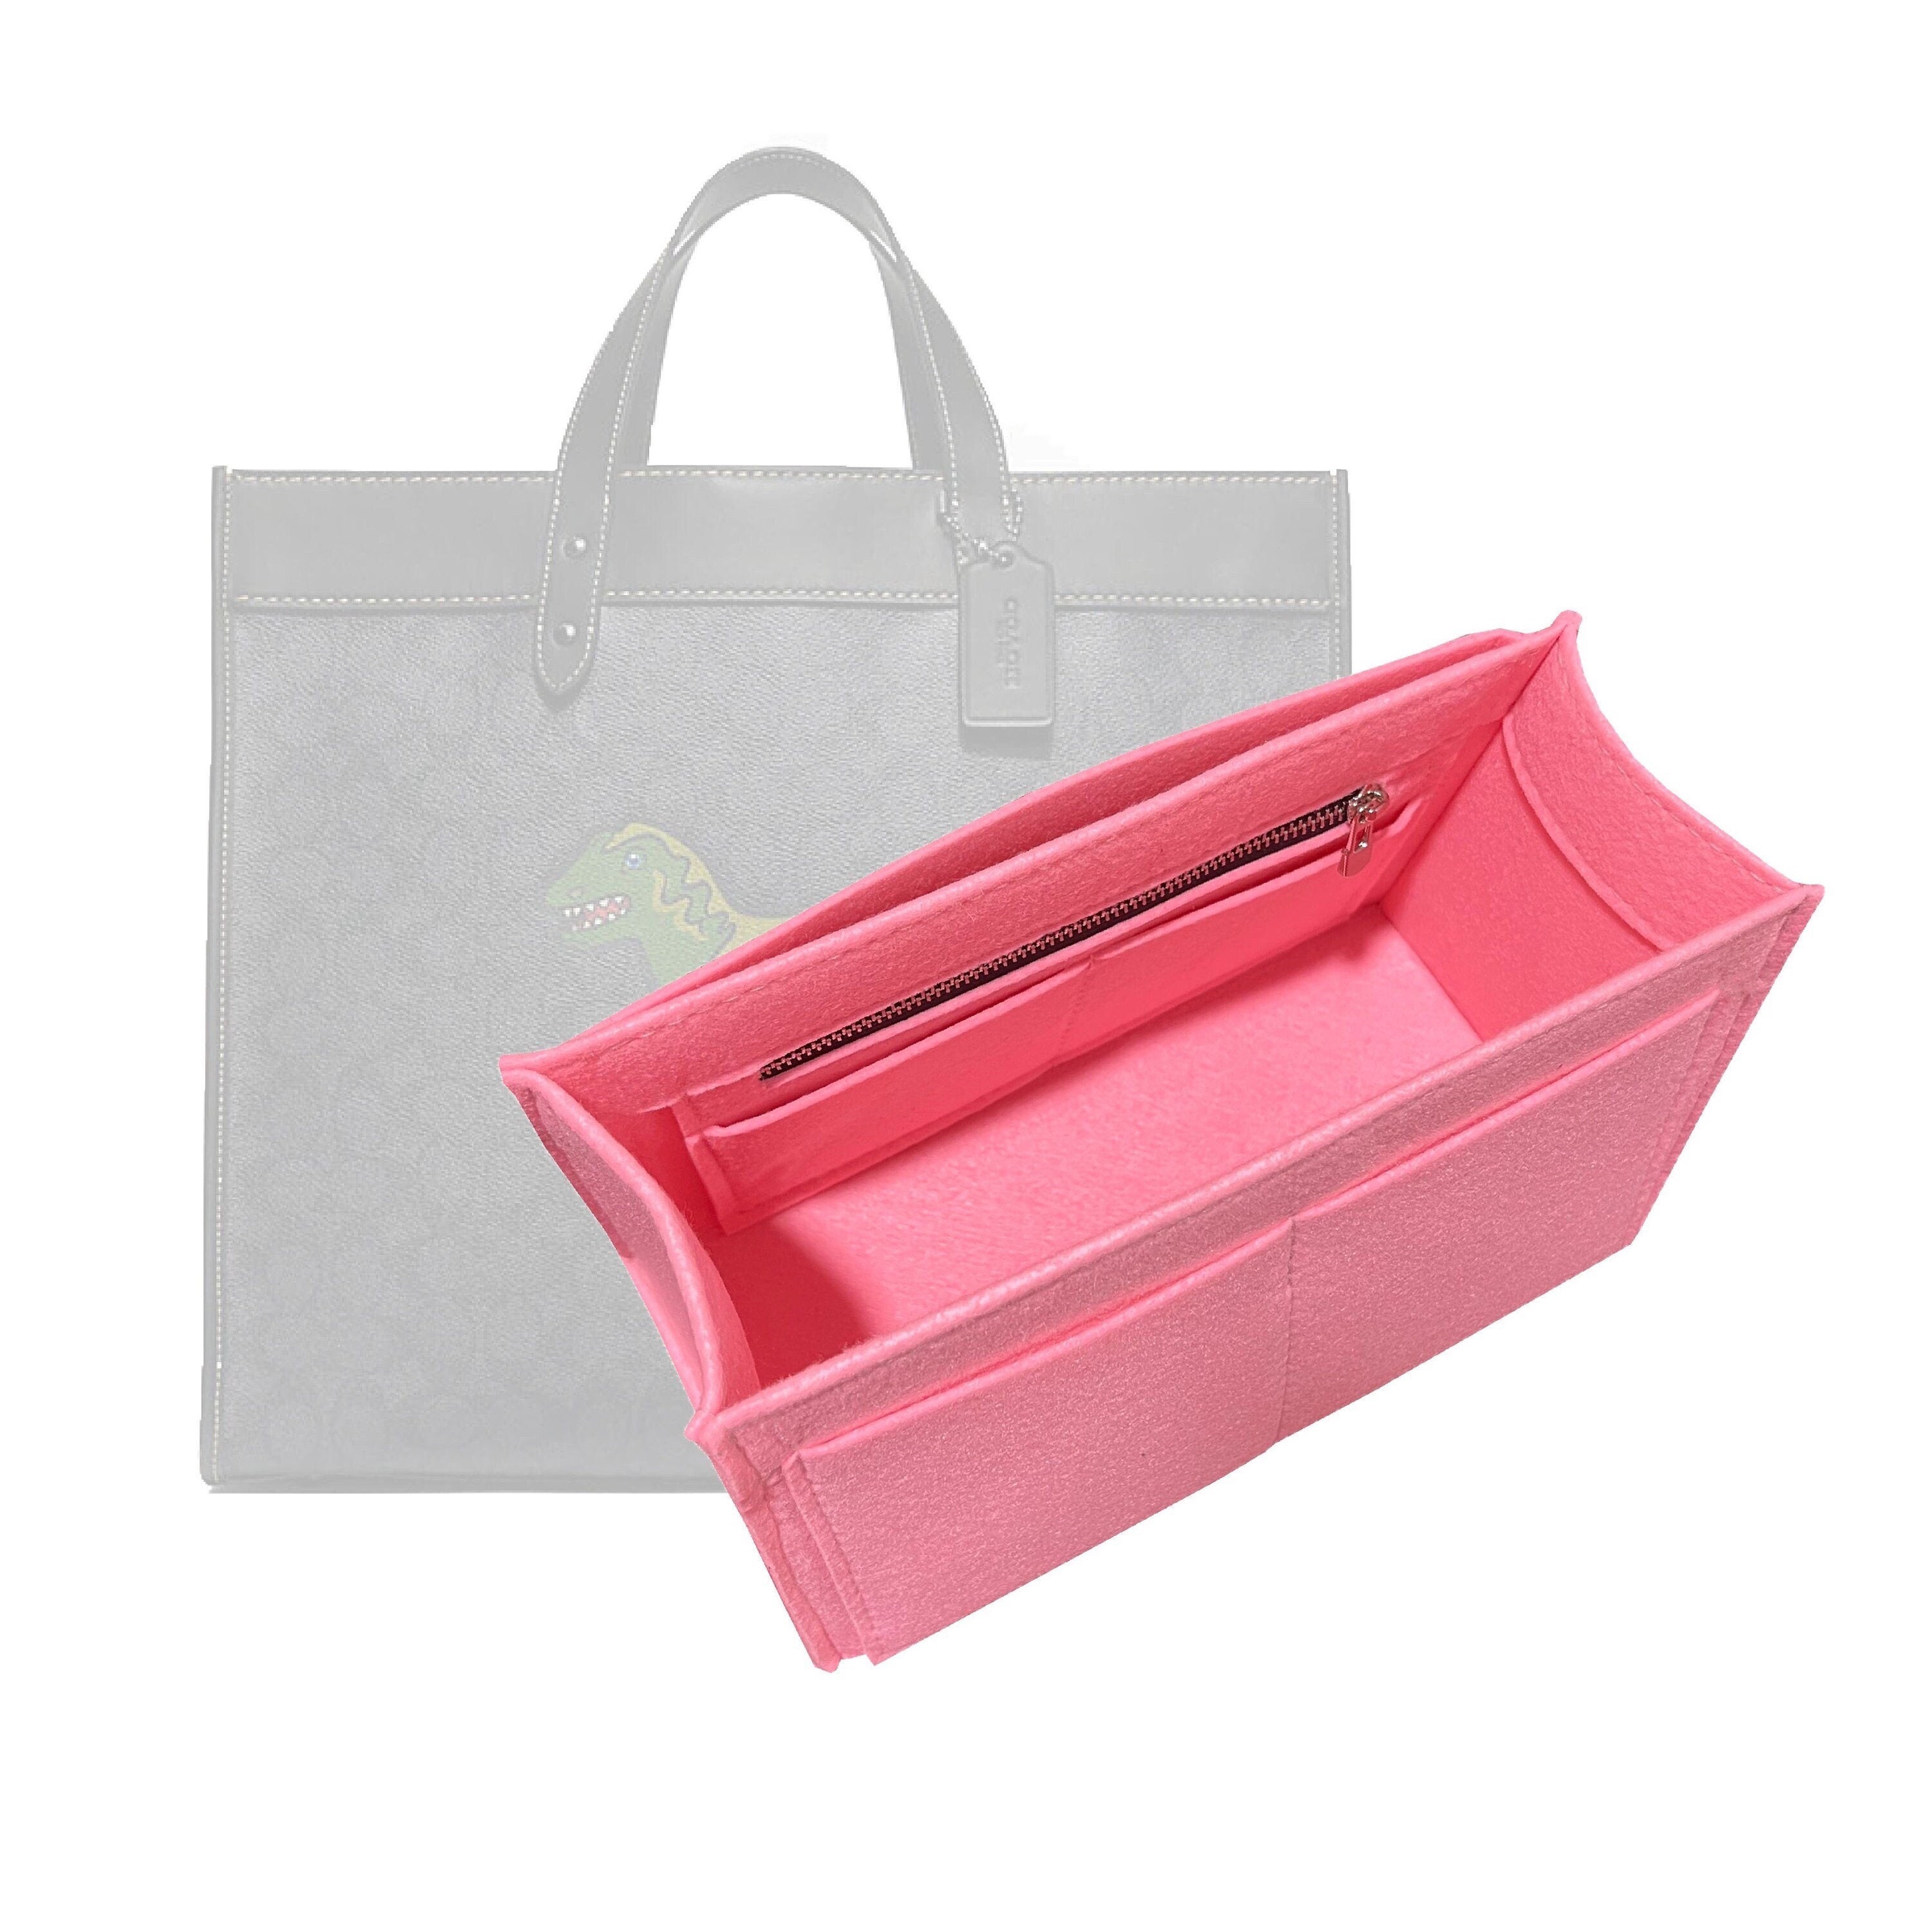 Willow trapezoid leather bag, Coach, Shop Women's Designer Bags Online